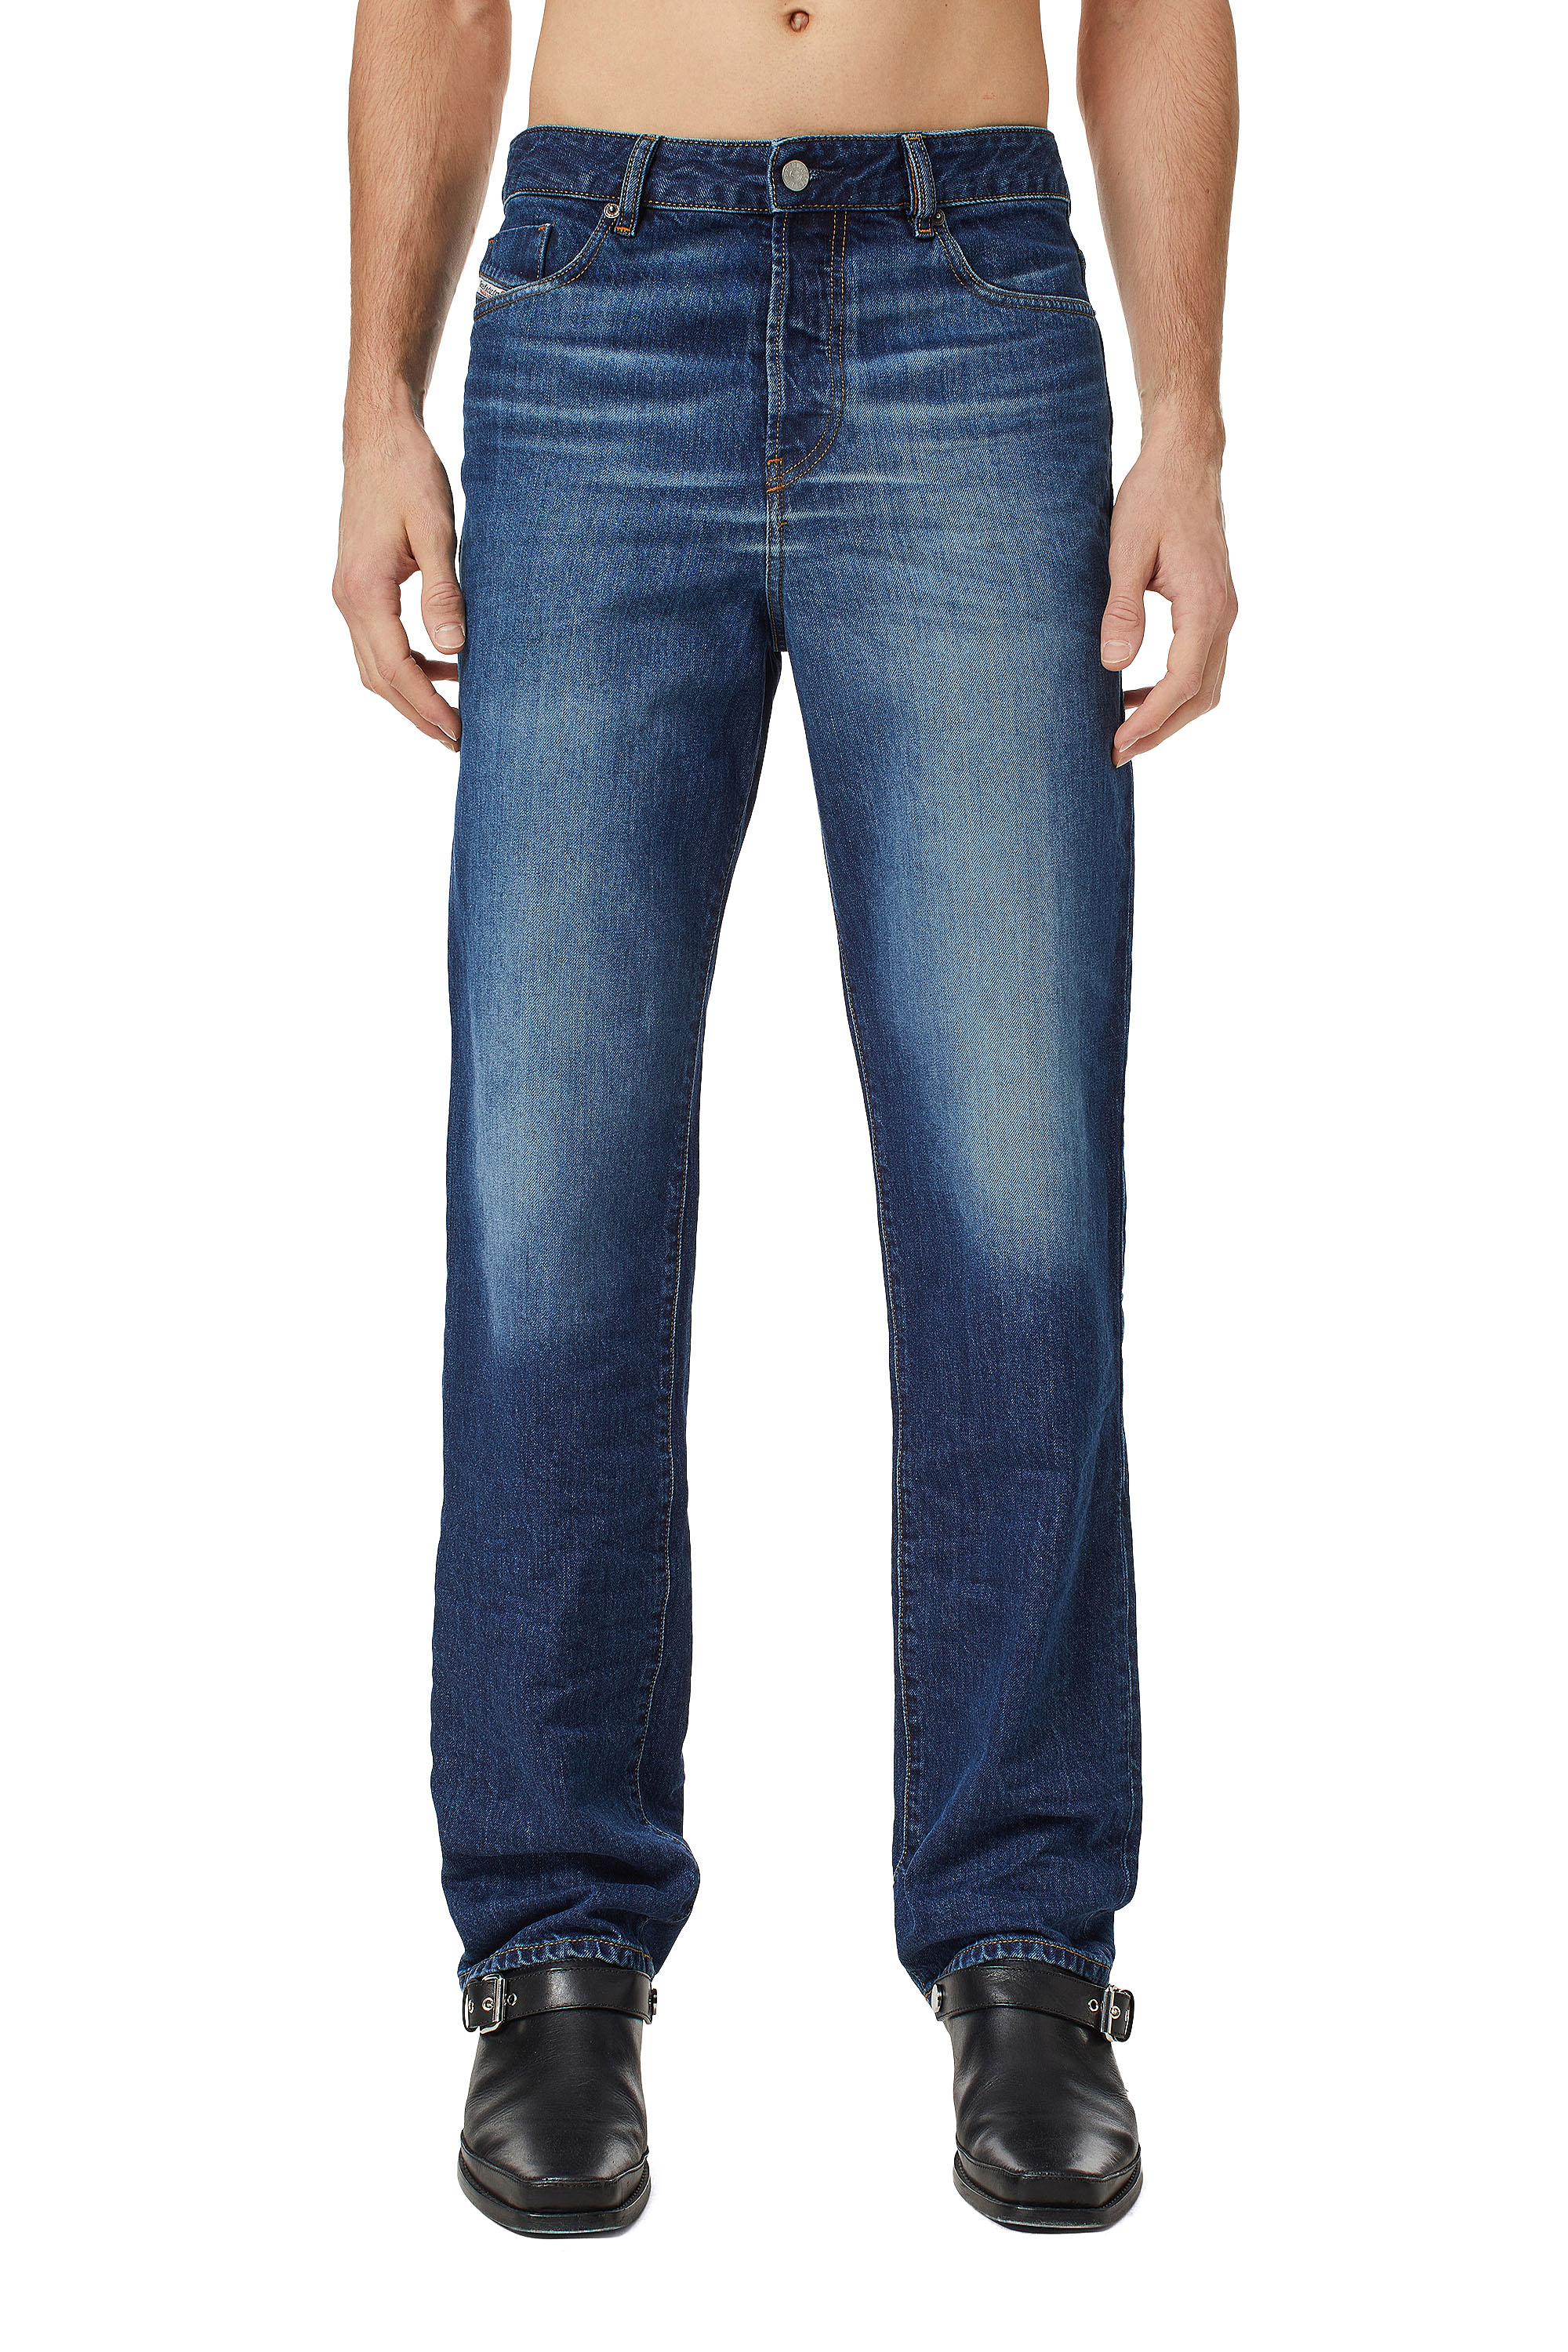 1955 09C65 Straight Jeans, Medium blue - Jeans